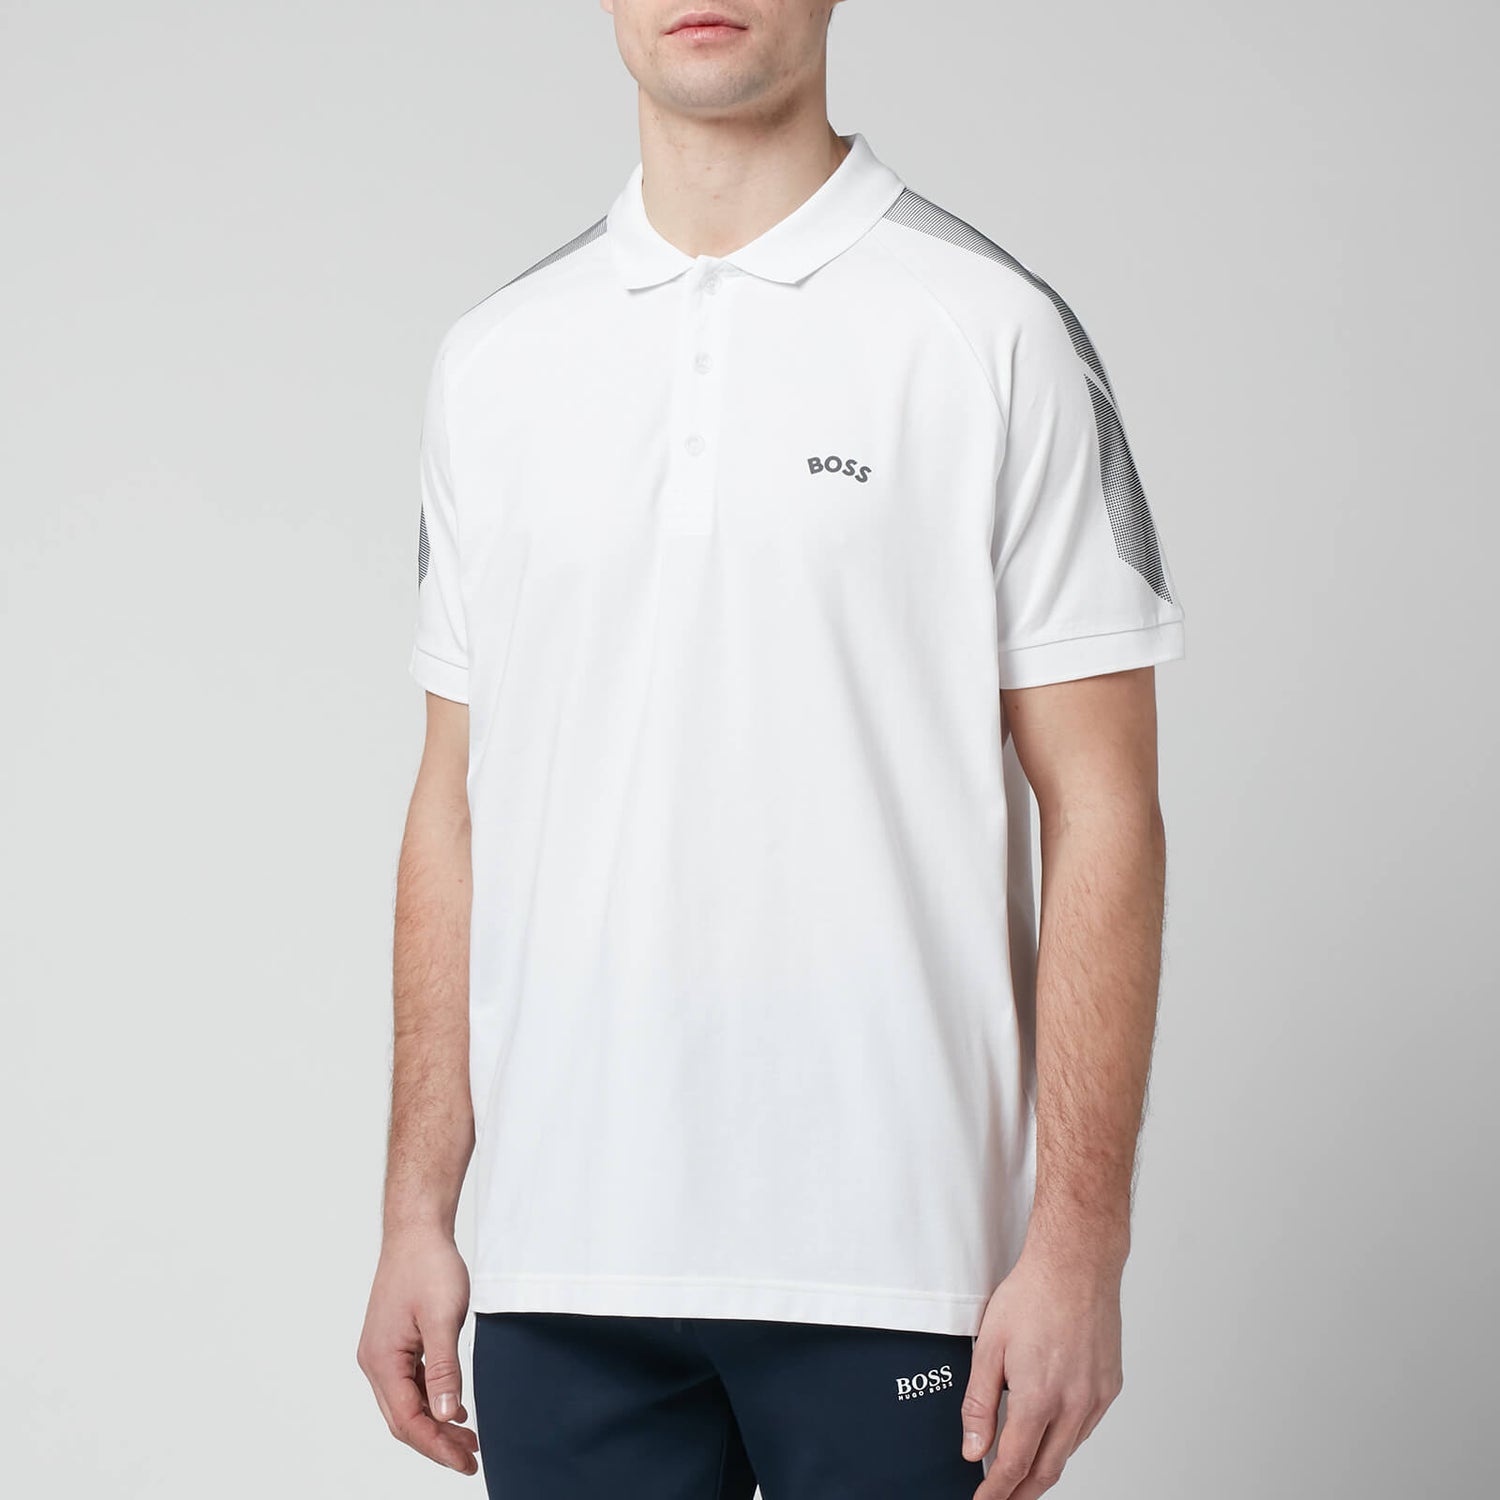 BOSS Green Men's Paule Naps Polo Shirt - White